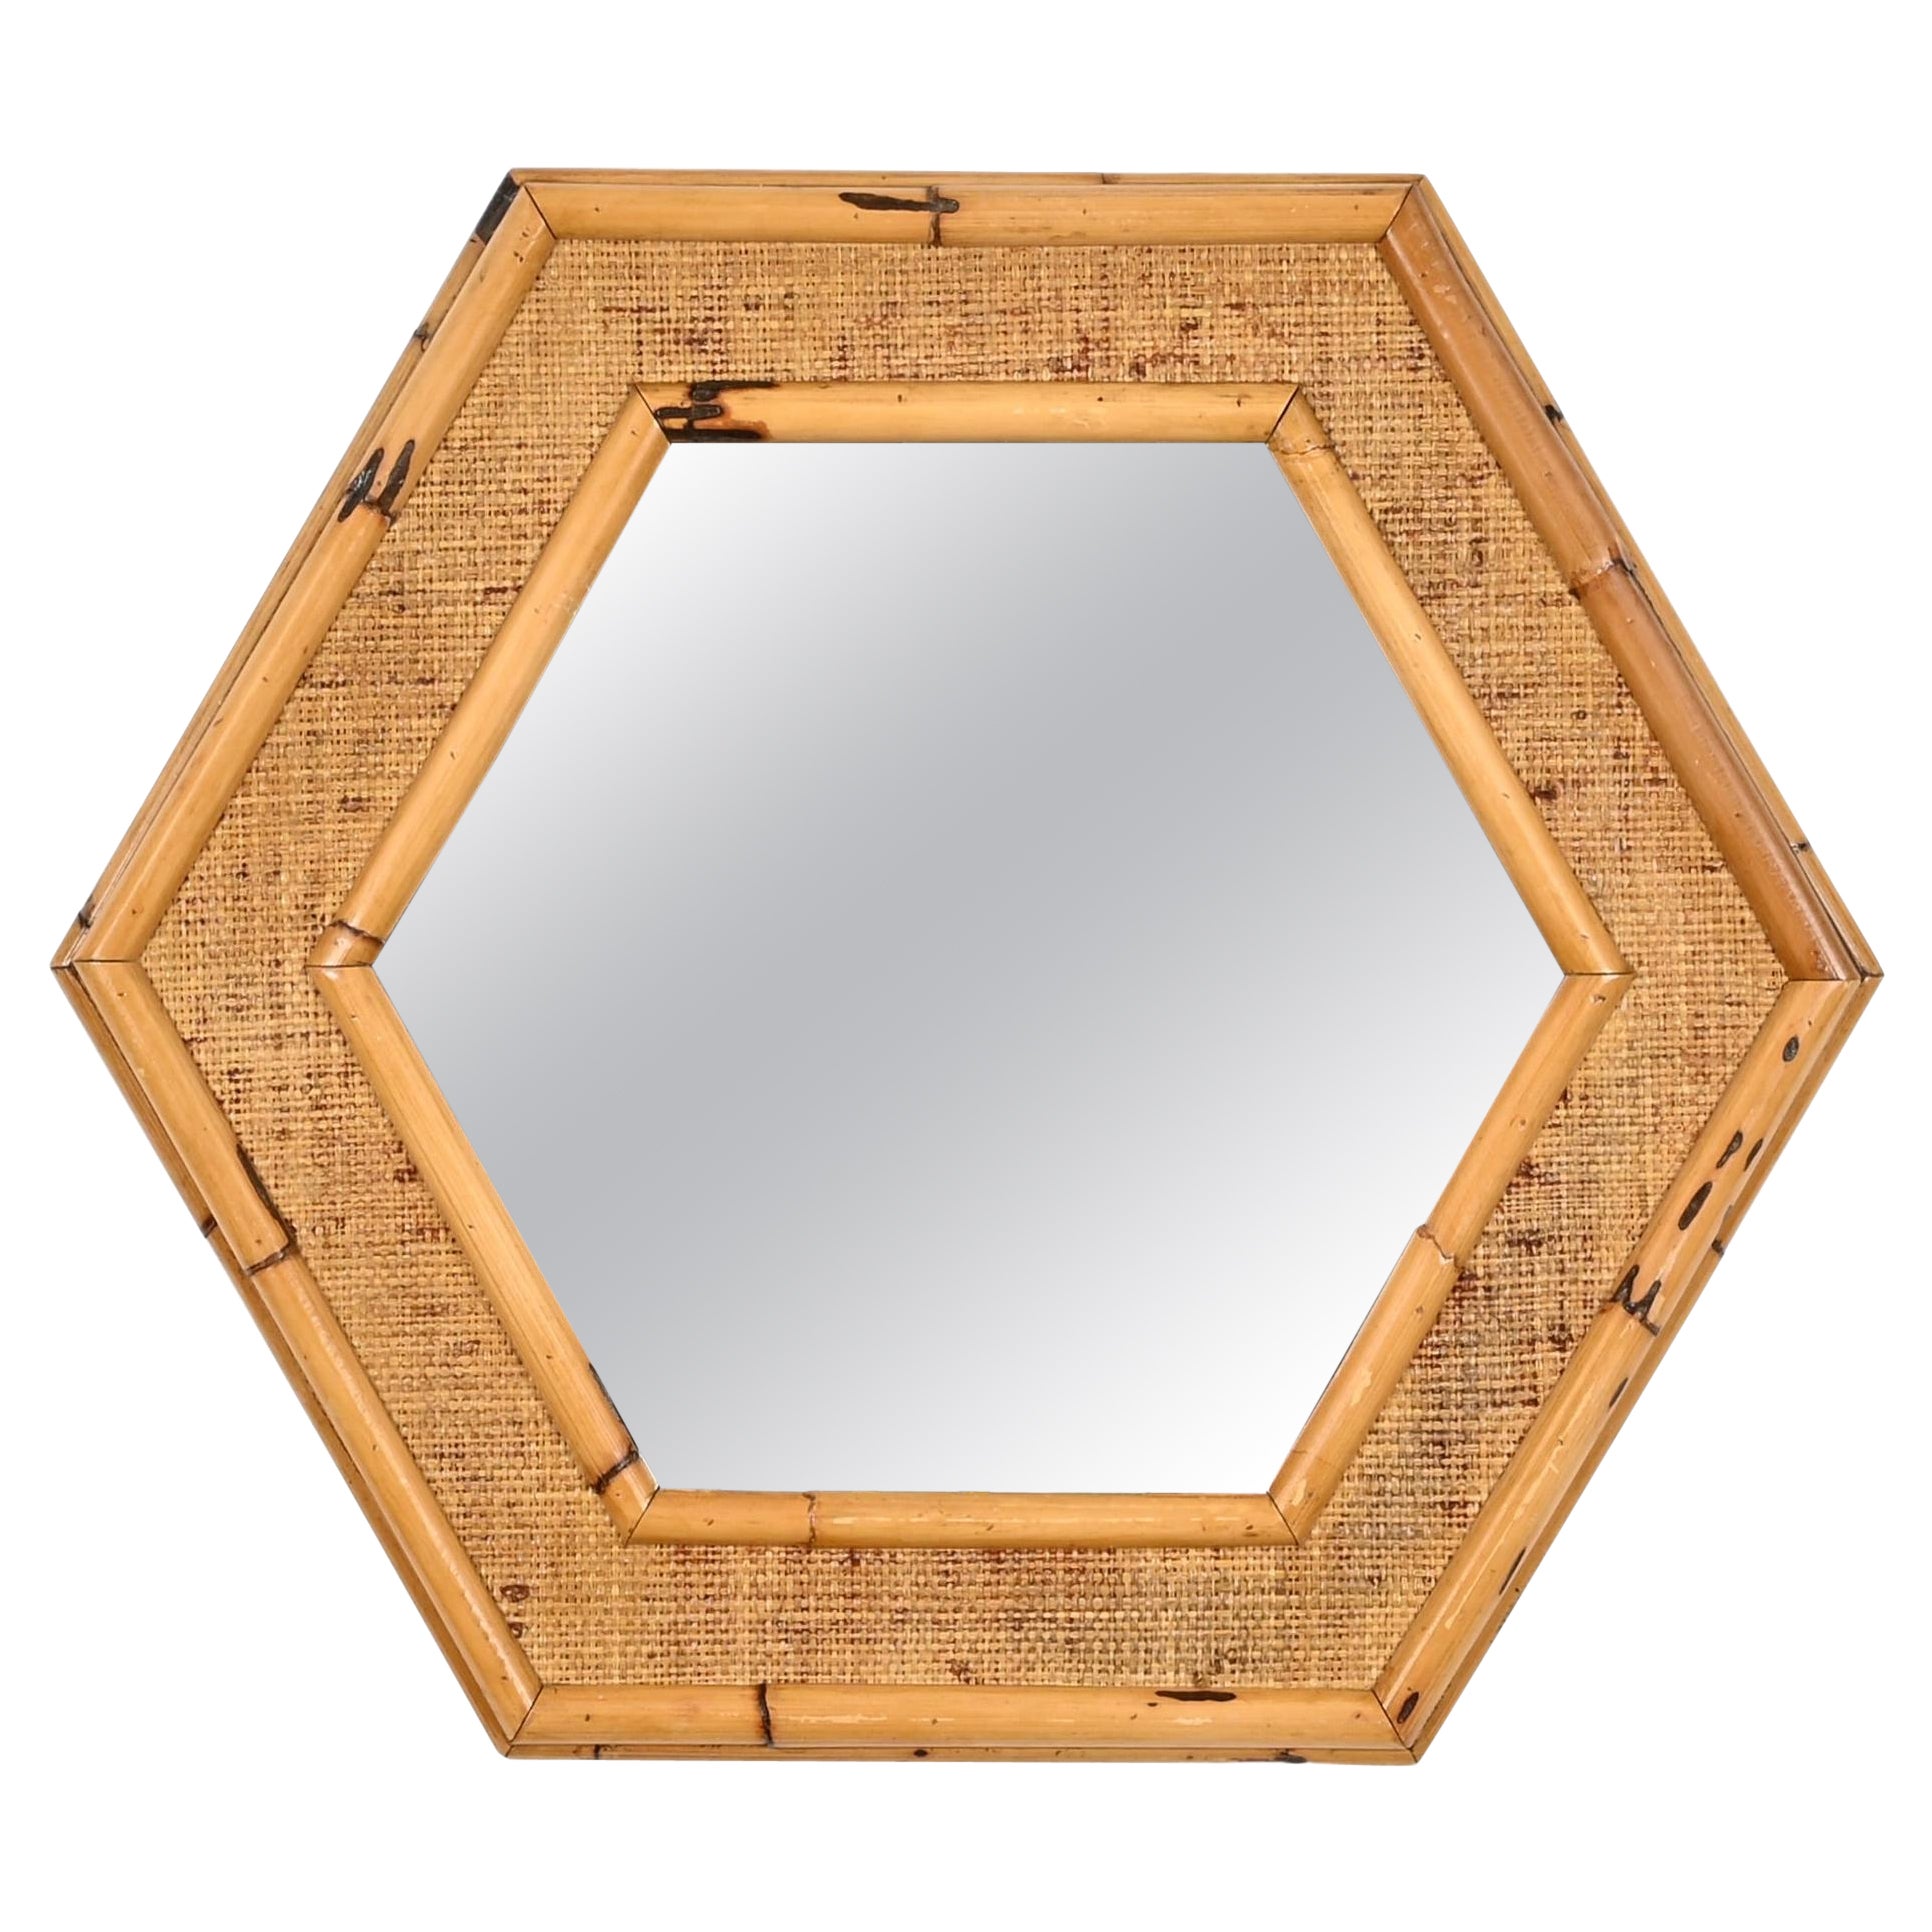 Mid-Century Italian Hexagonal Mirror in Rattam and Bamboo, Italy 1970s